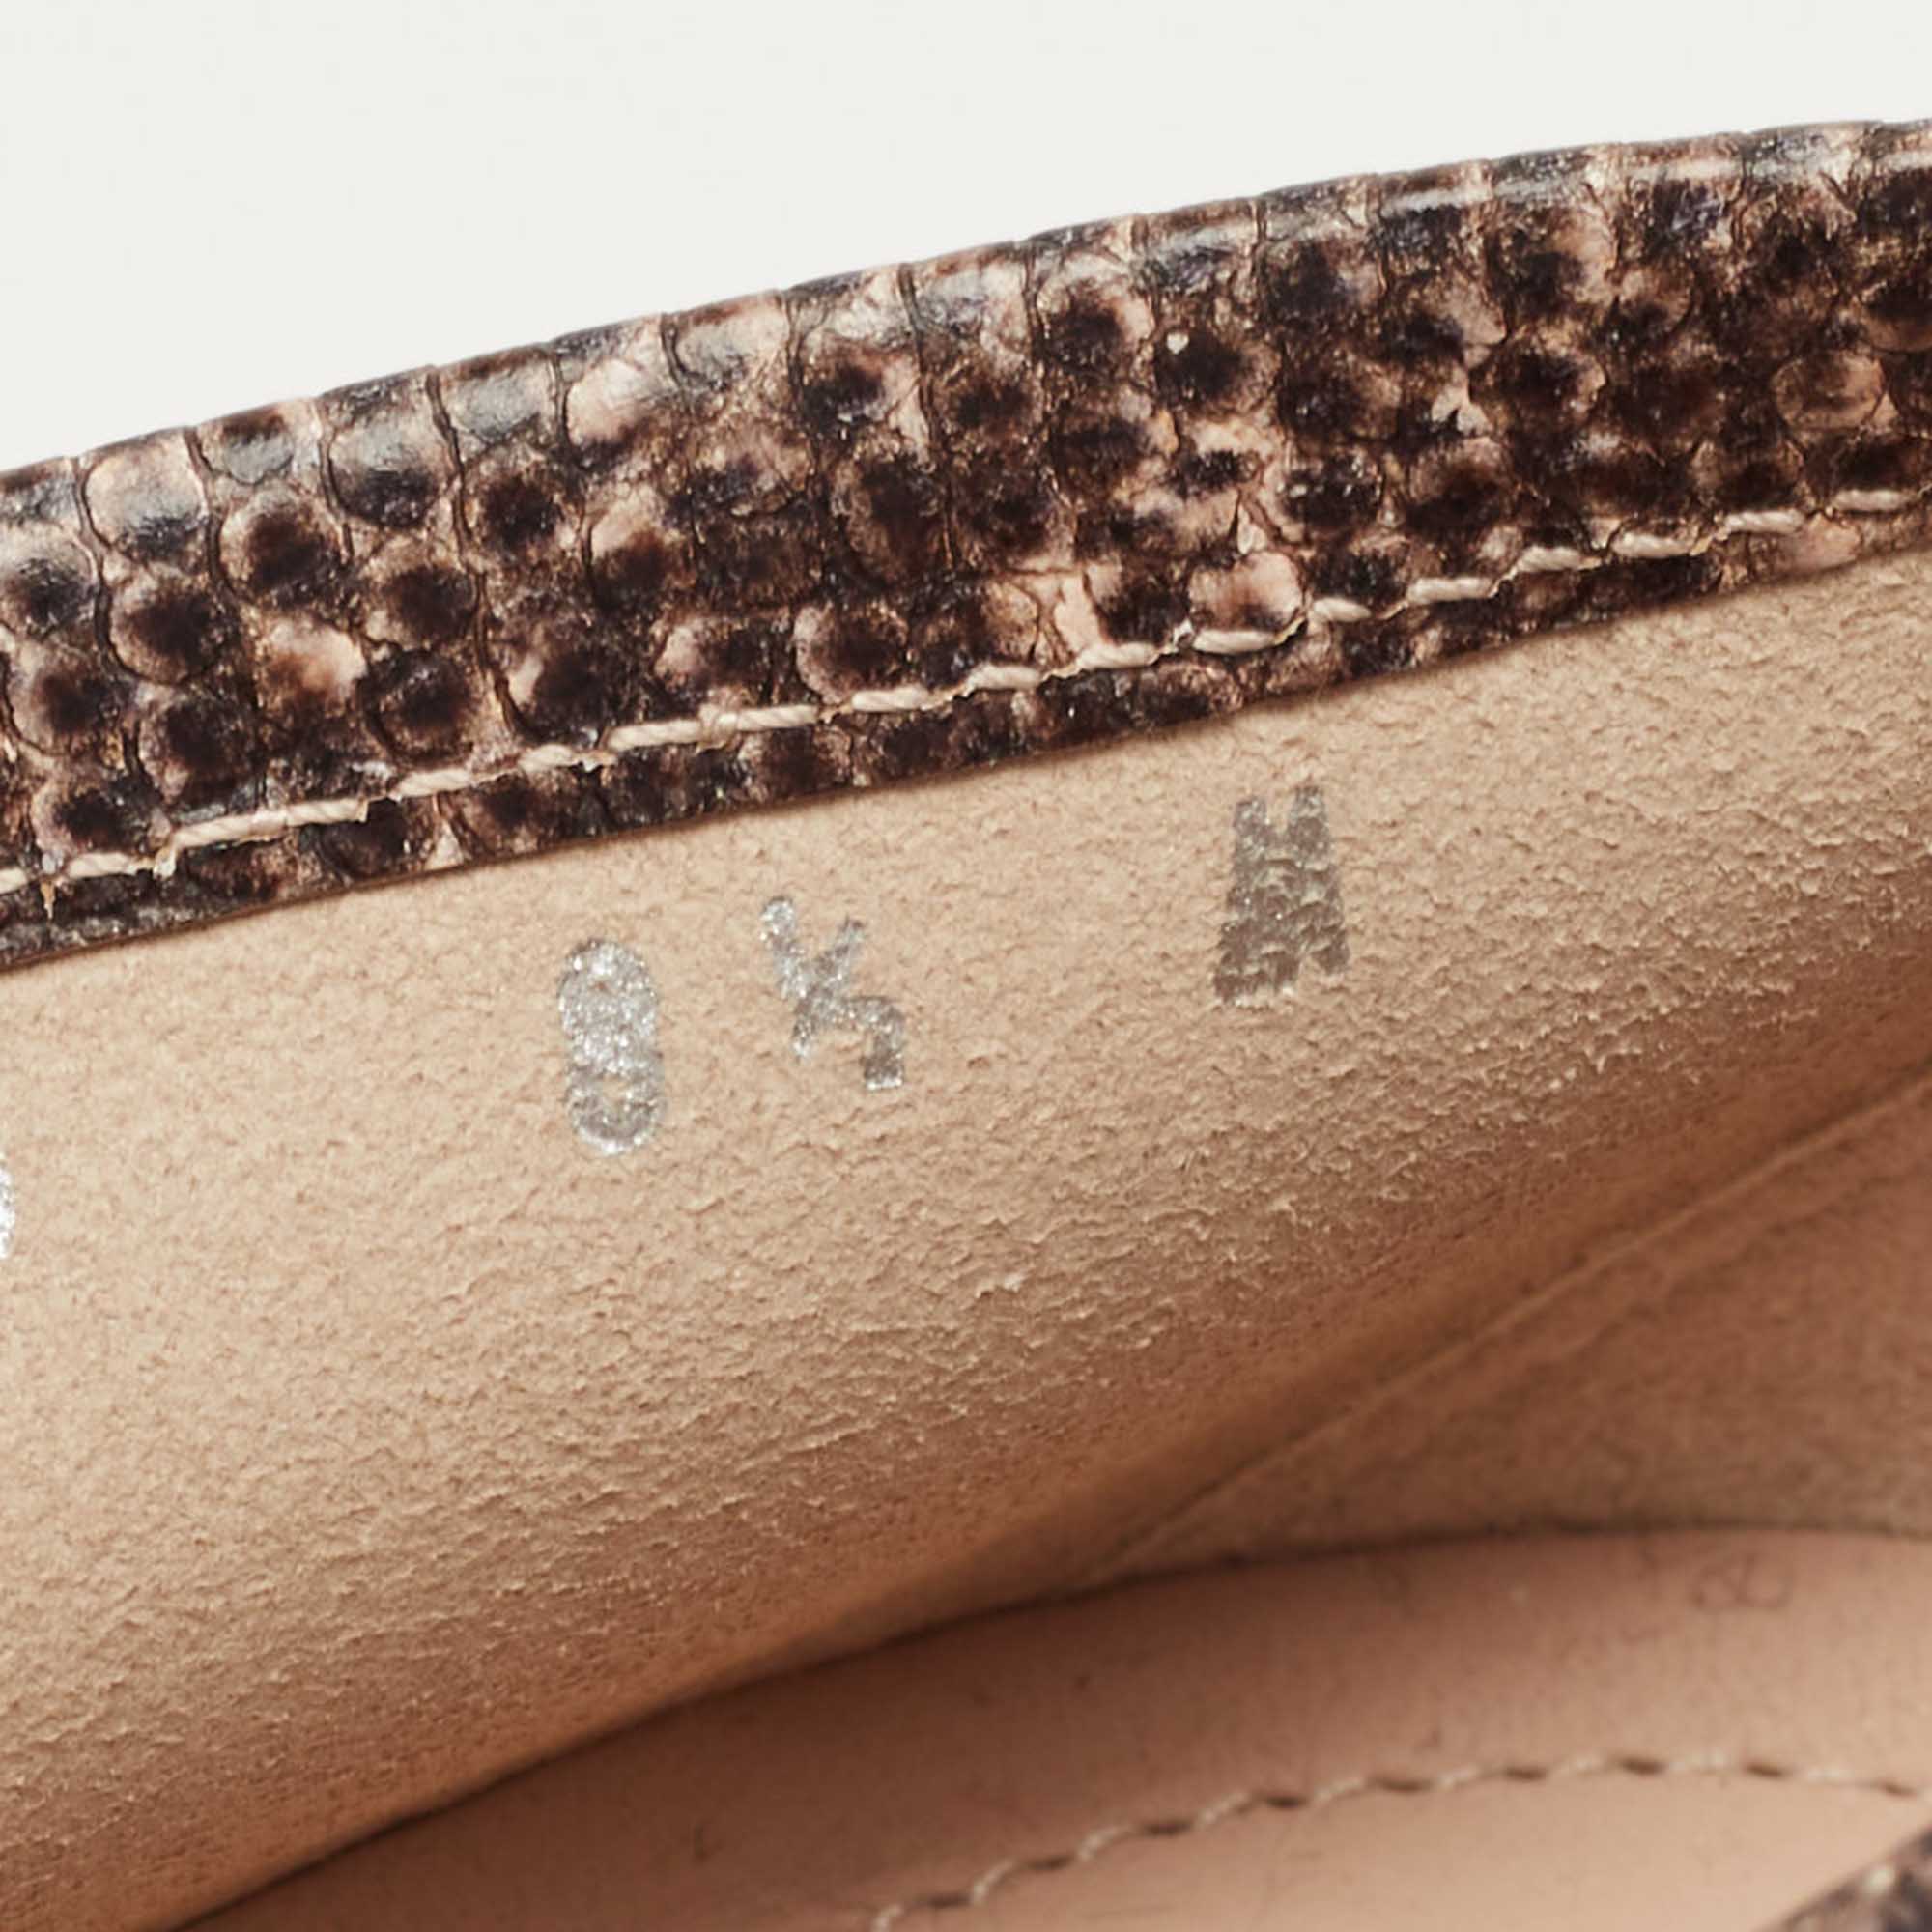 Salvatore Ferragamo Beige/Brown Lizard Embossed Leather Gancini Loafers Size 39